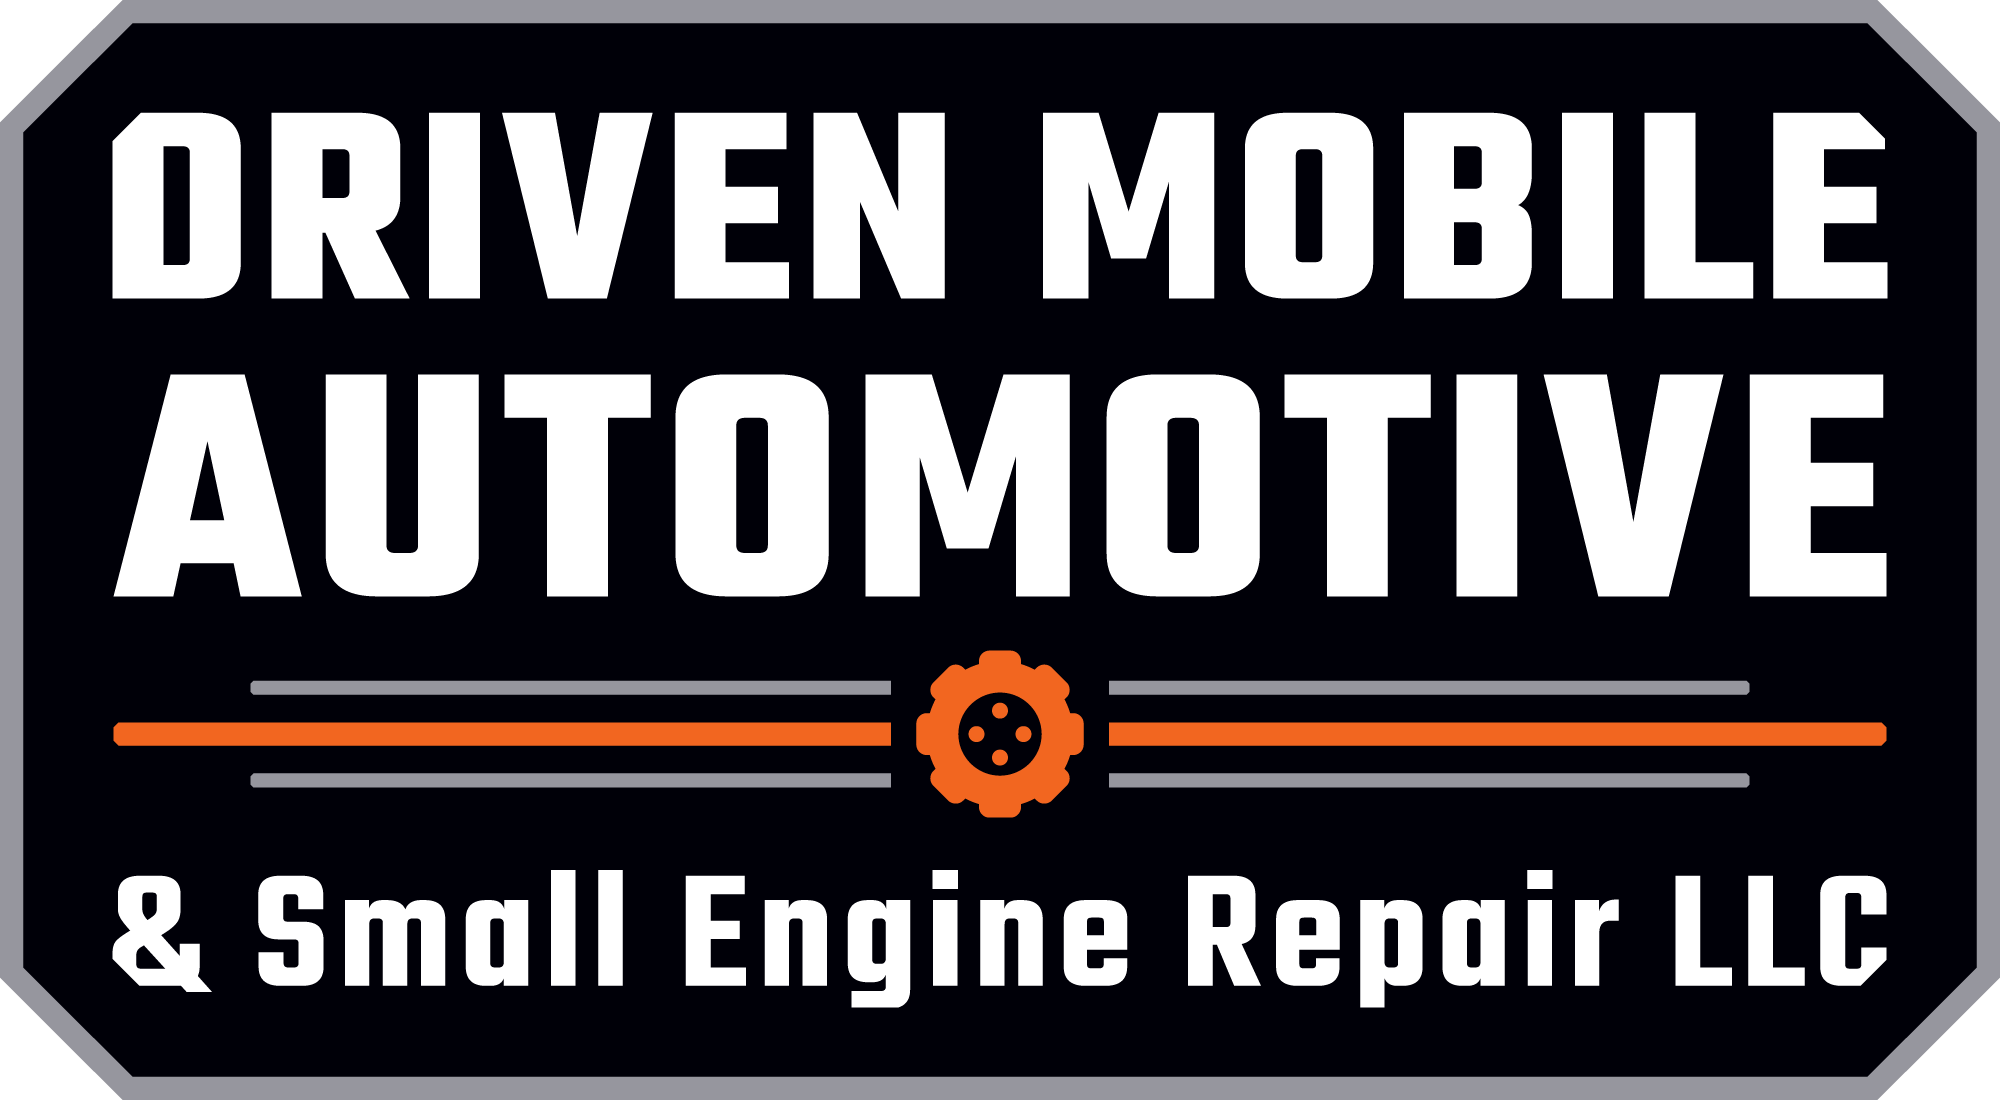 Driven Mobile Automotive & Small Engine Repair LLC